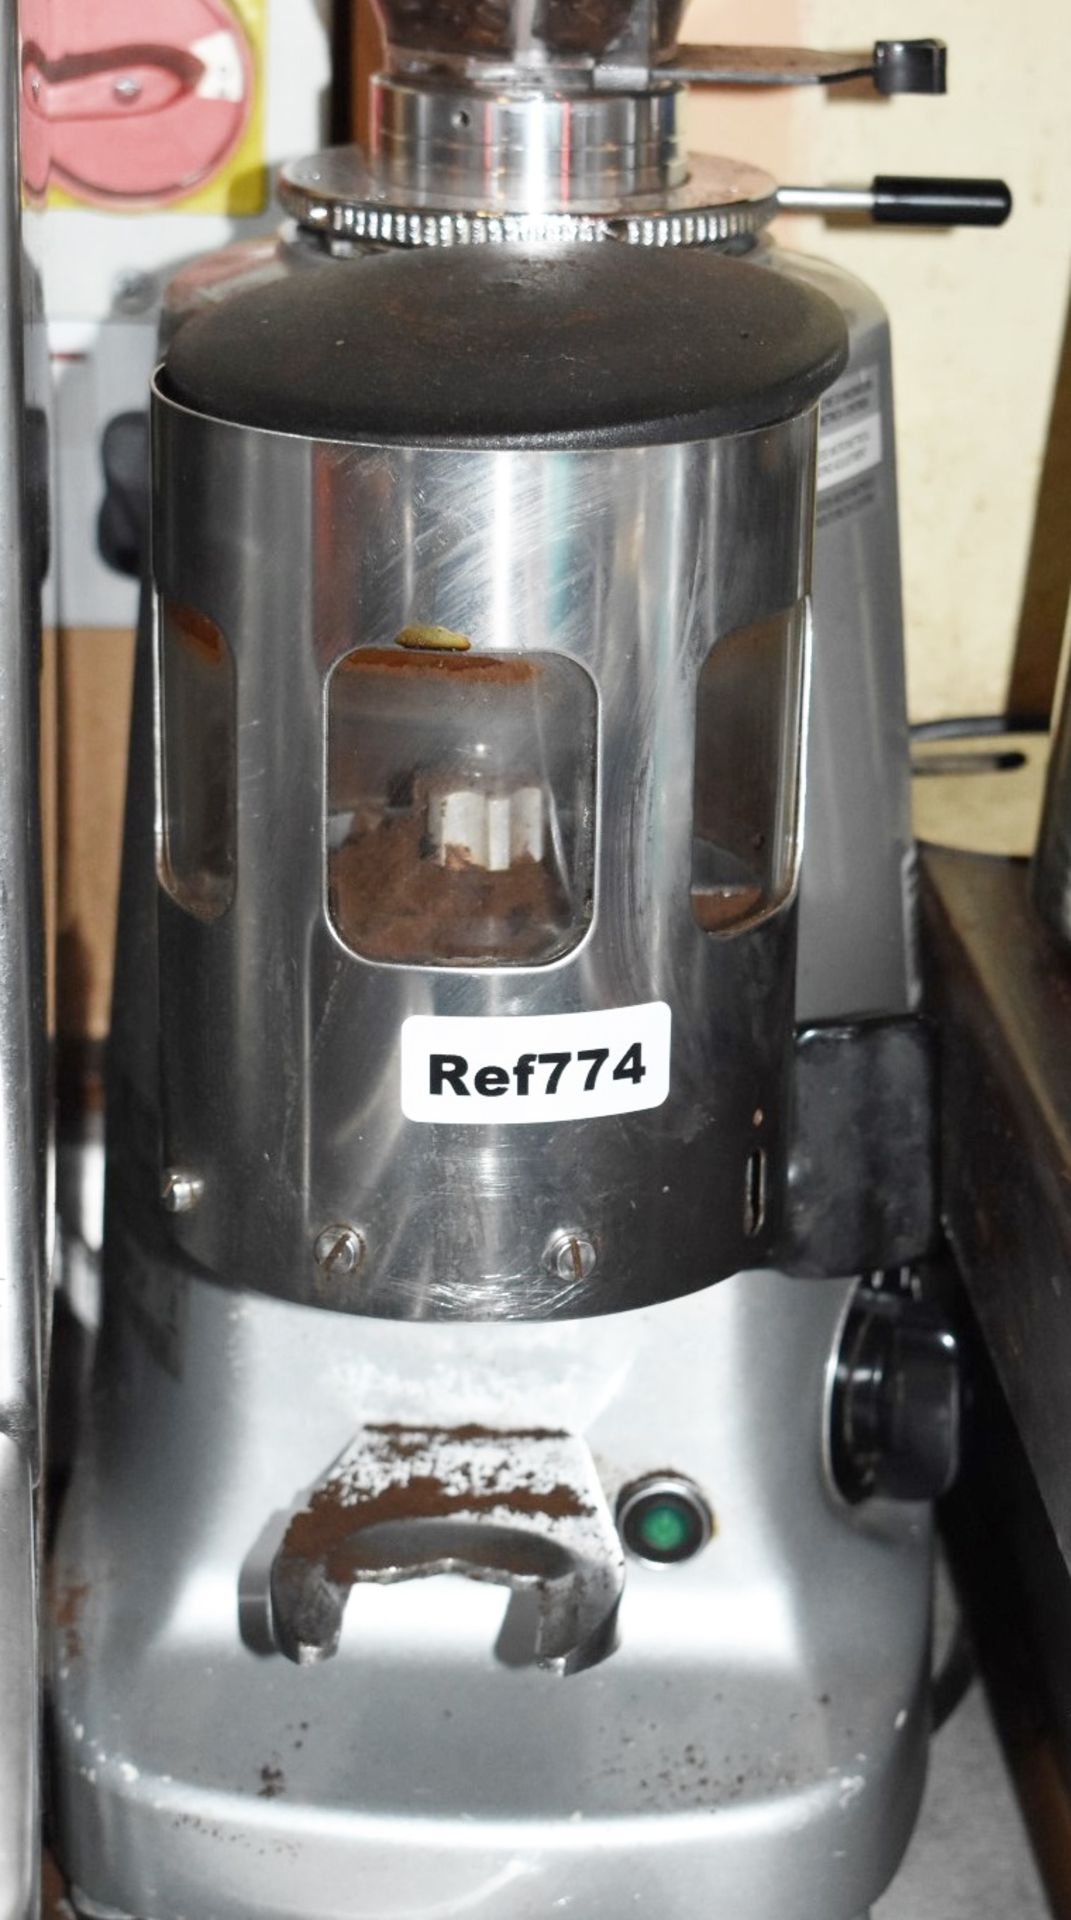 1 x Casadio Coffee Grinder - Espresso Italiano - 240v - Ref C774 - CL461 - Location: Altrincham WA14 - Image 3 of 3